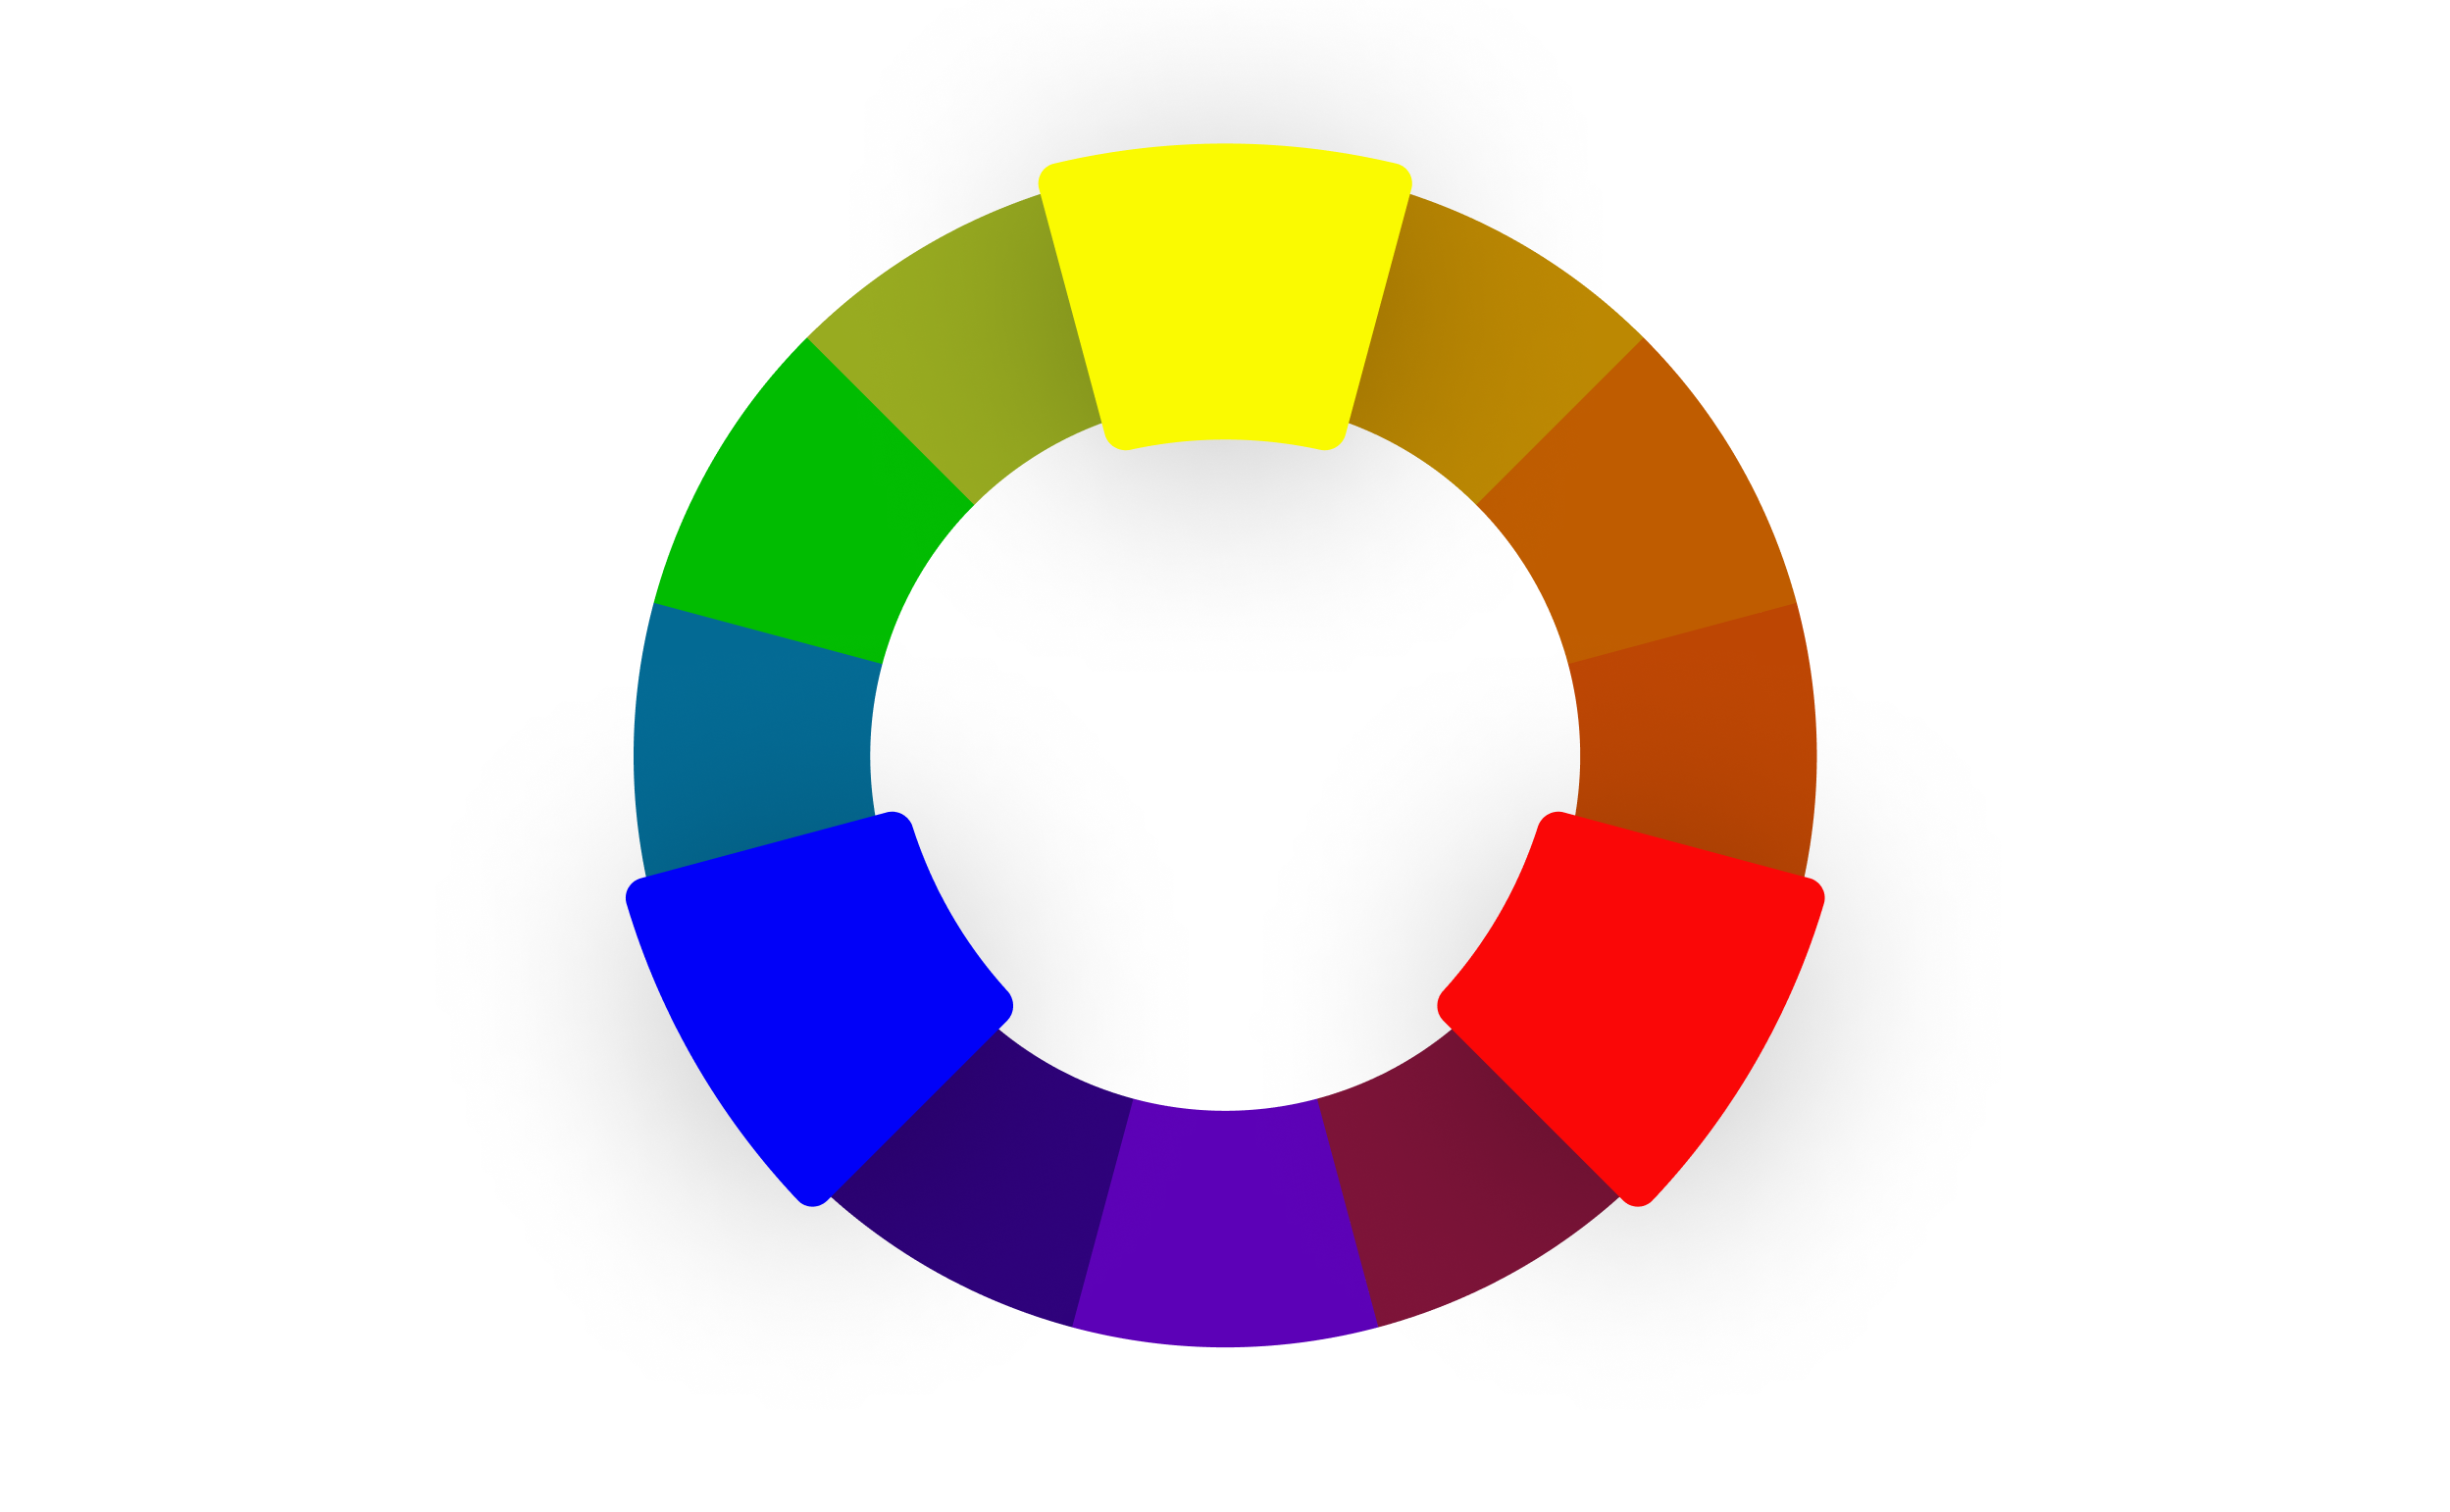 Color Wheel Picker, Online Color Theory & Calculator